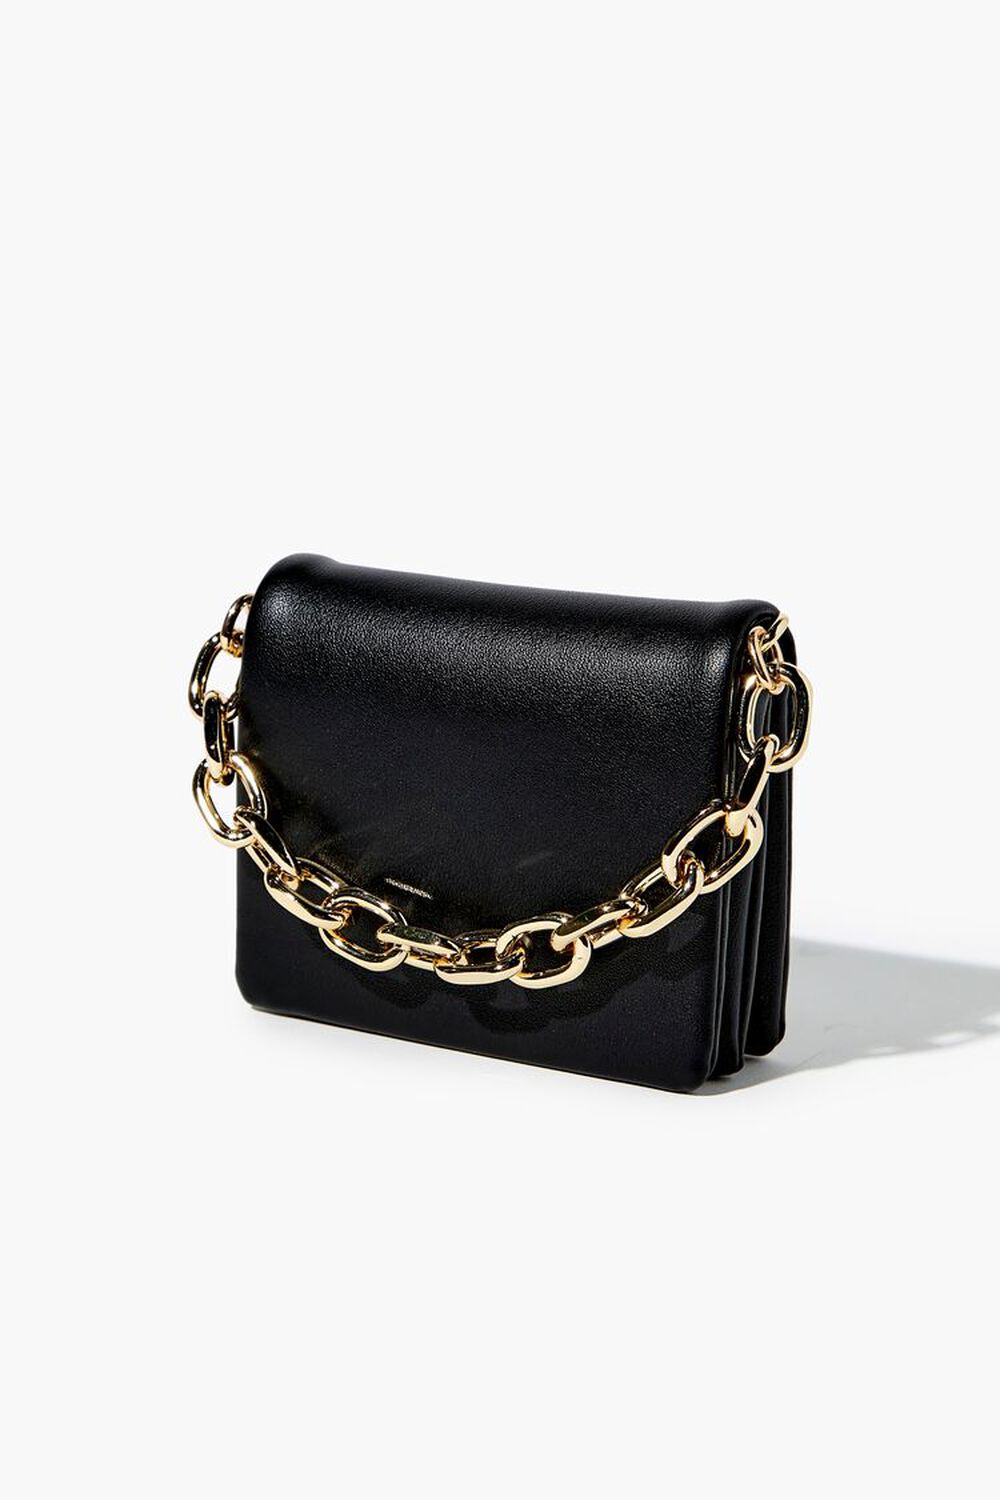 Chain Crossbody Bag for Spring • hey, it's jenna